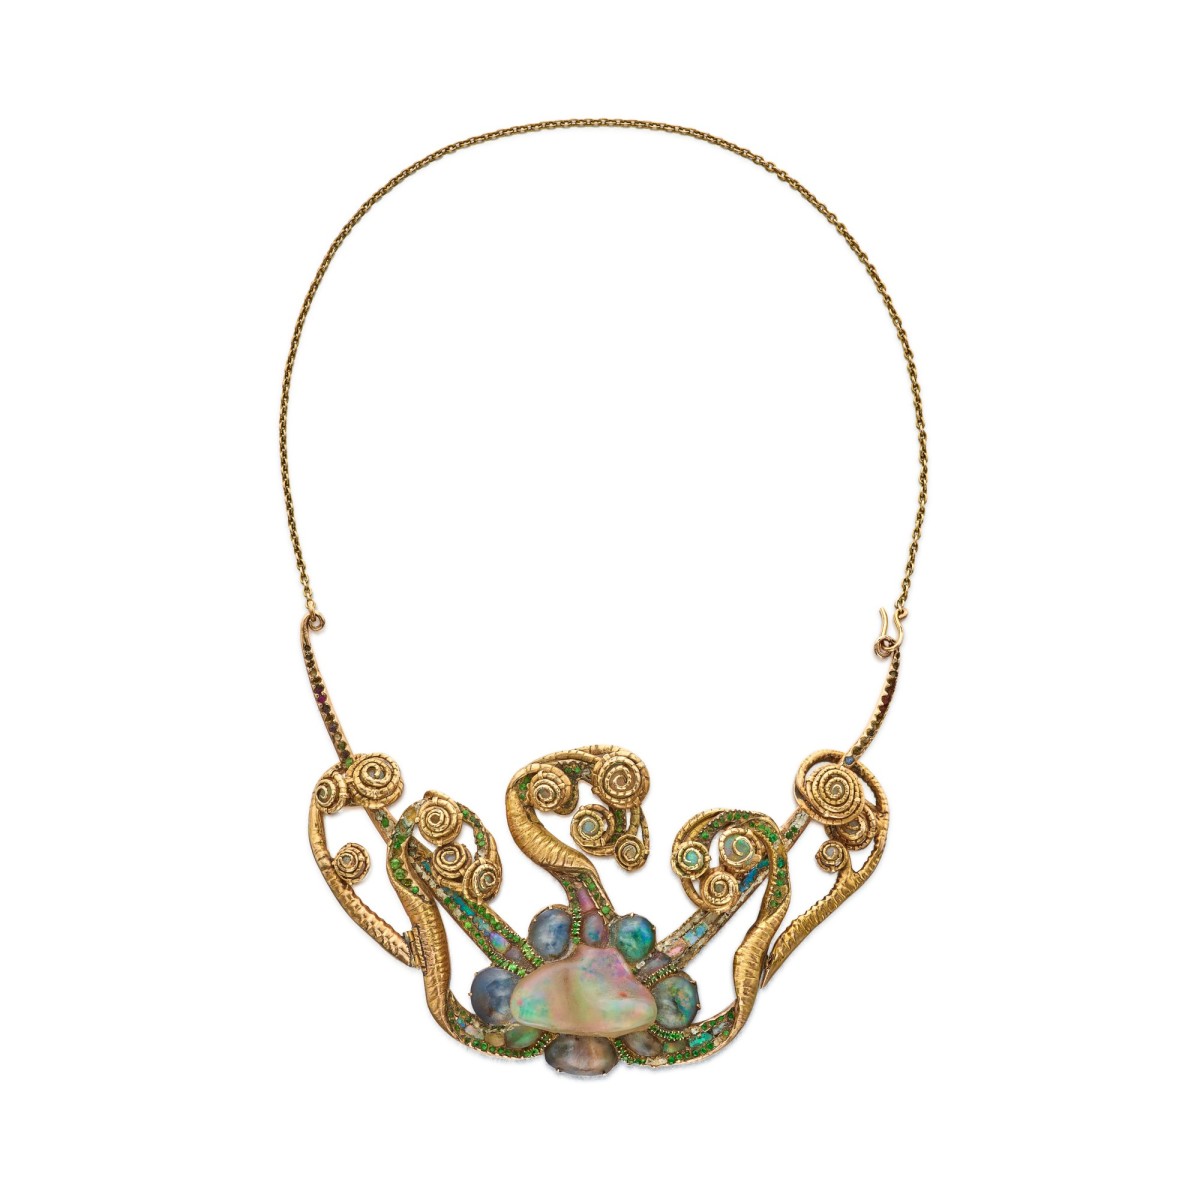 Gorgeous Medusa-inspired Peacock Jewelry